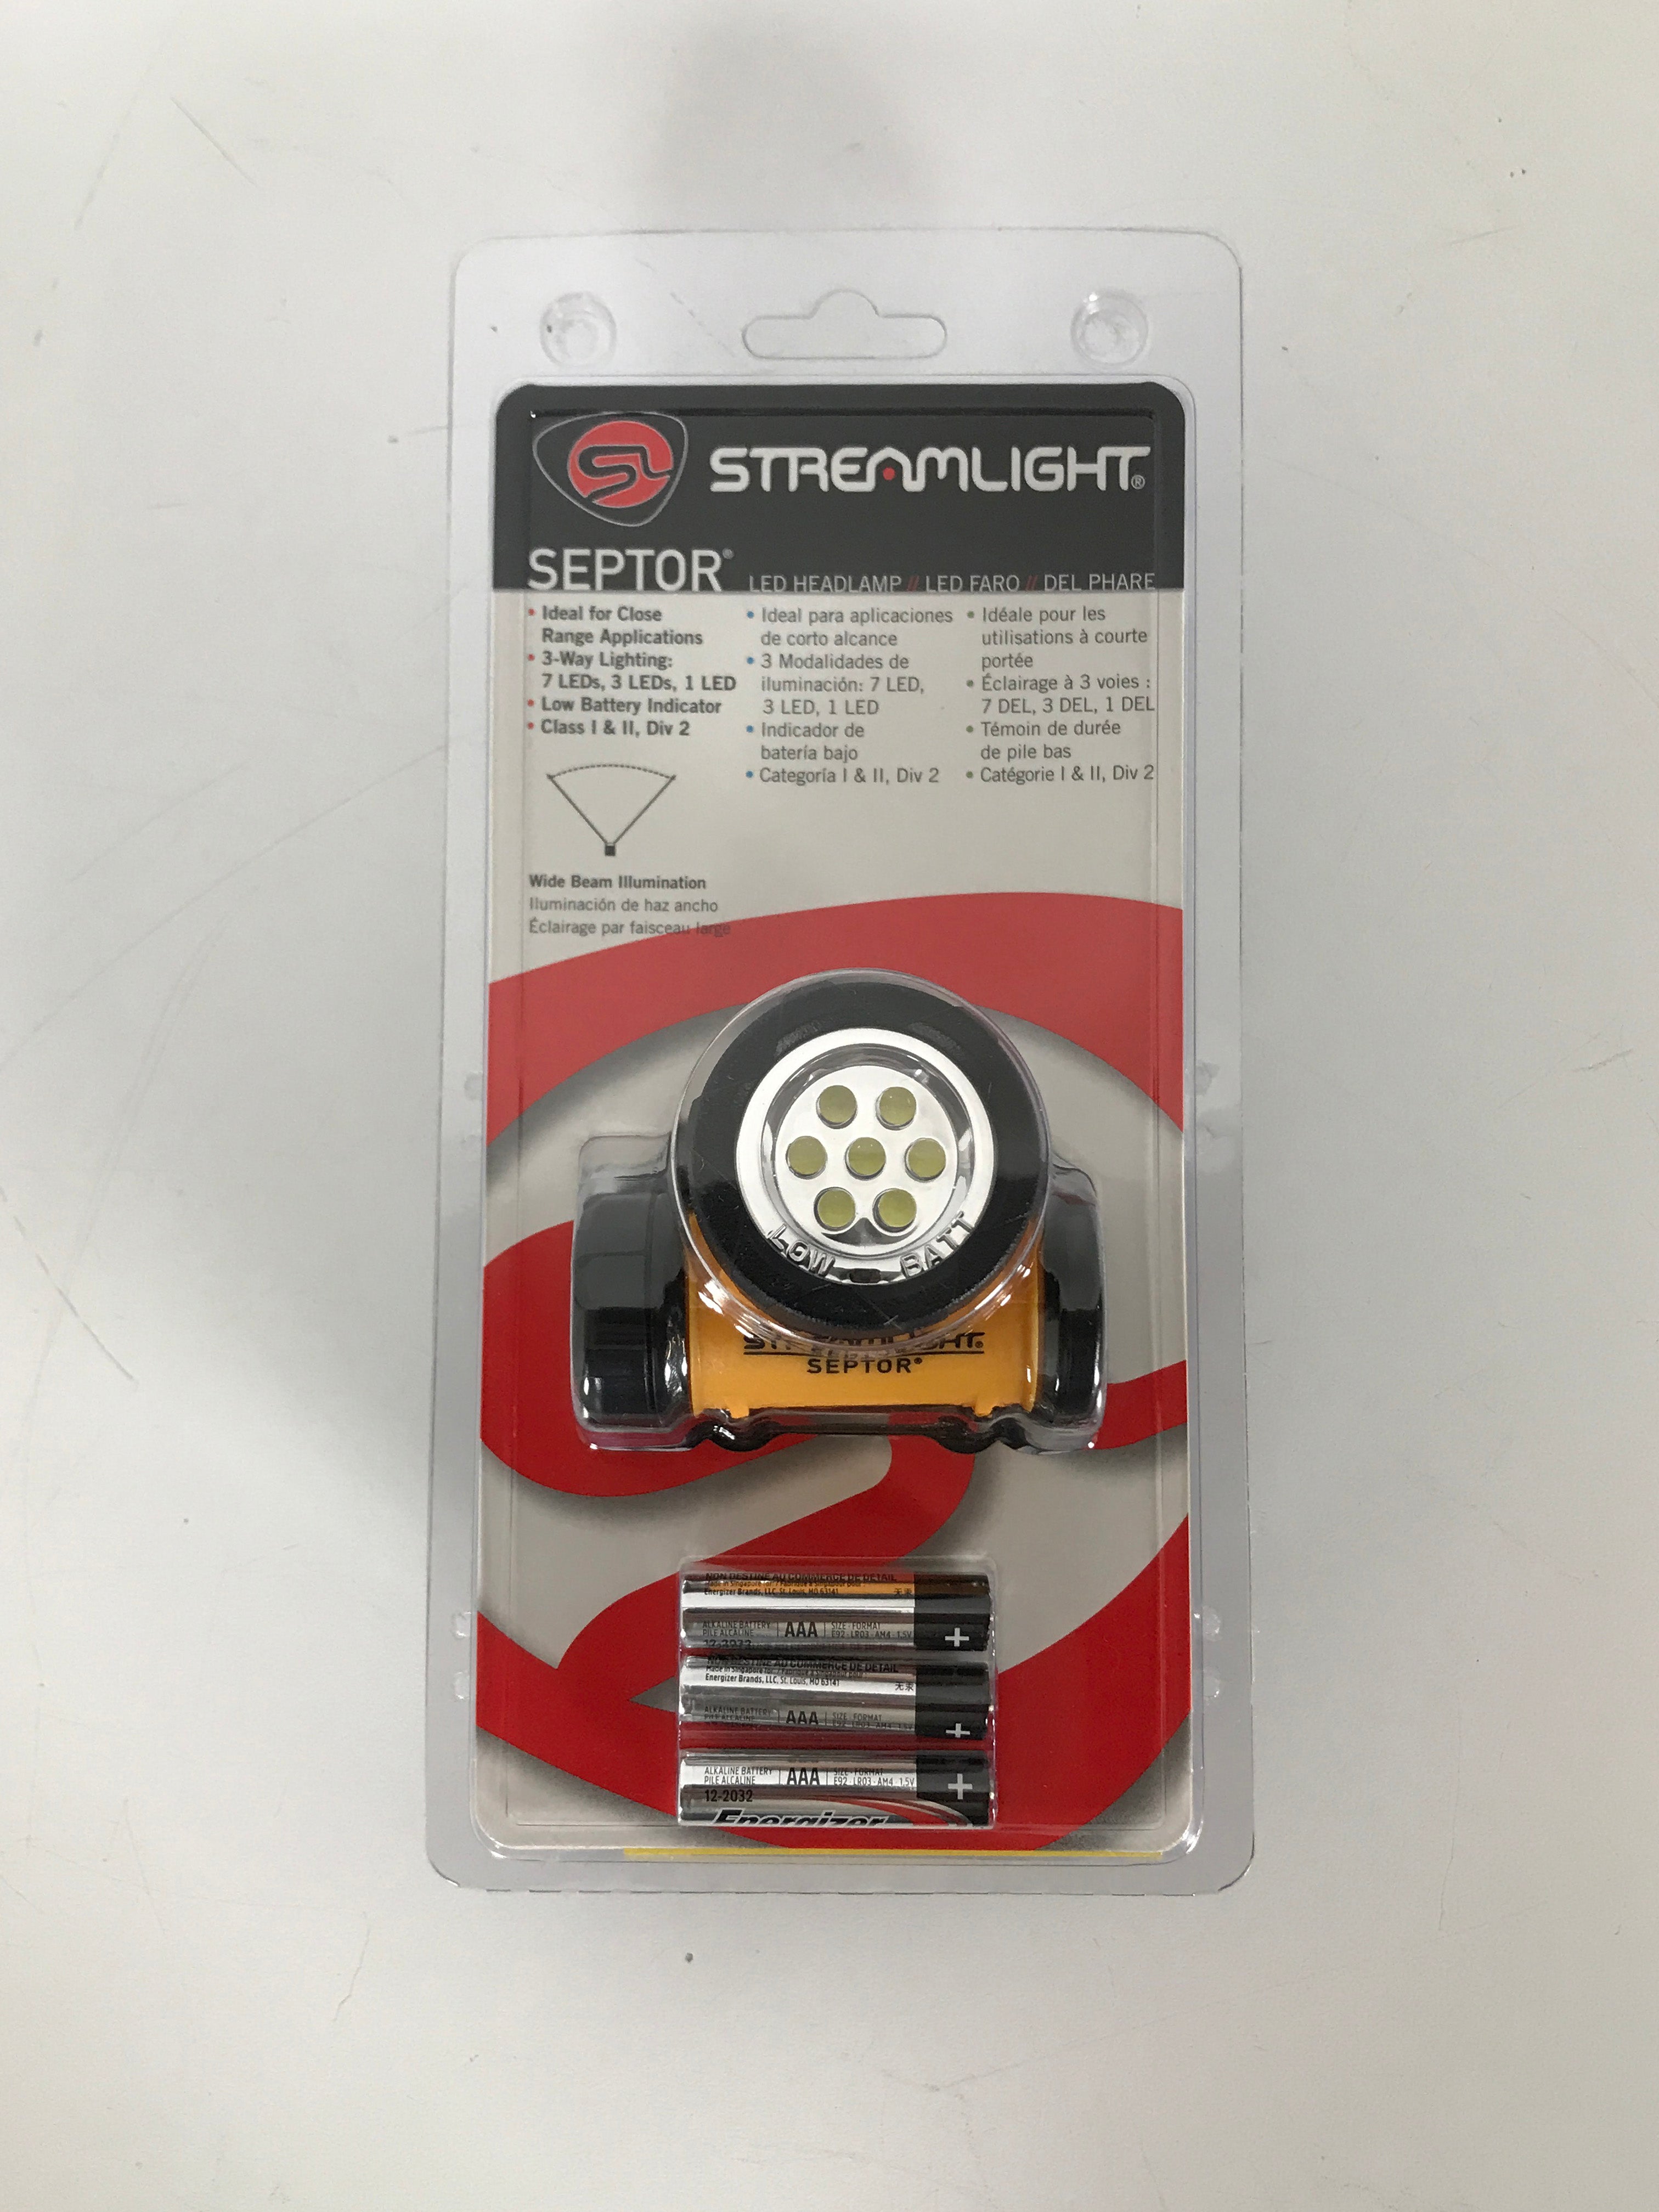 Streamlight Septor LED Headlamp *New in Package*